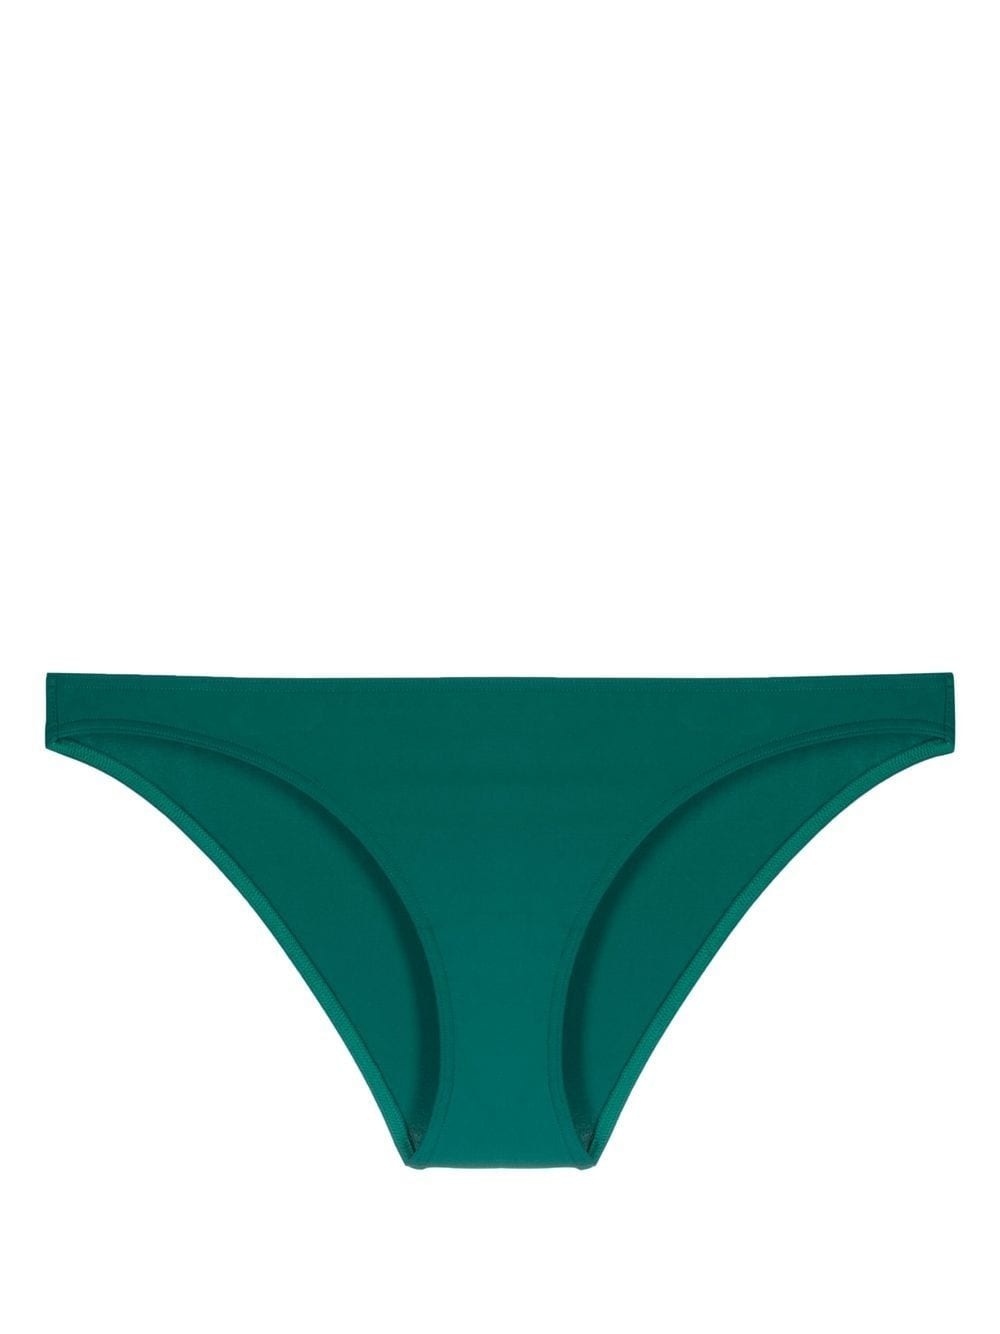 Fripon classic bikini bottoms - 1